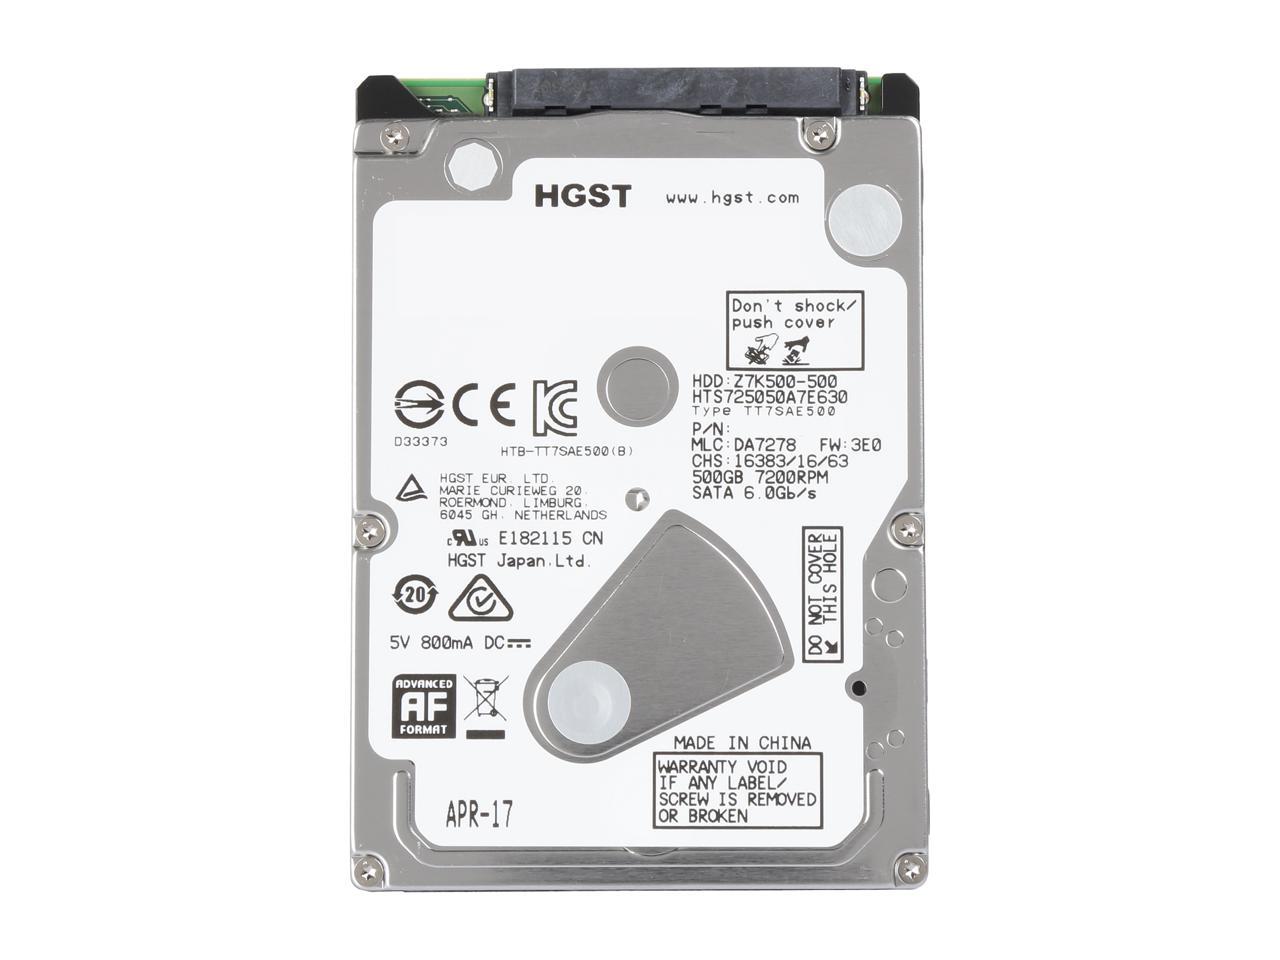 HGST Travelstar Z7K500 HTS725050A7E630 (0J38075) 500GB 7200 RPM 32MB Cache SATA 6.0Gb/s 2.5" Internal Notebook Hard Drive Bare Drive